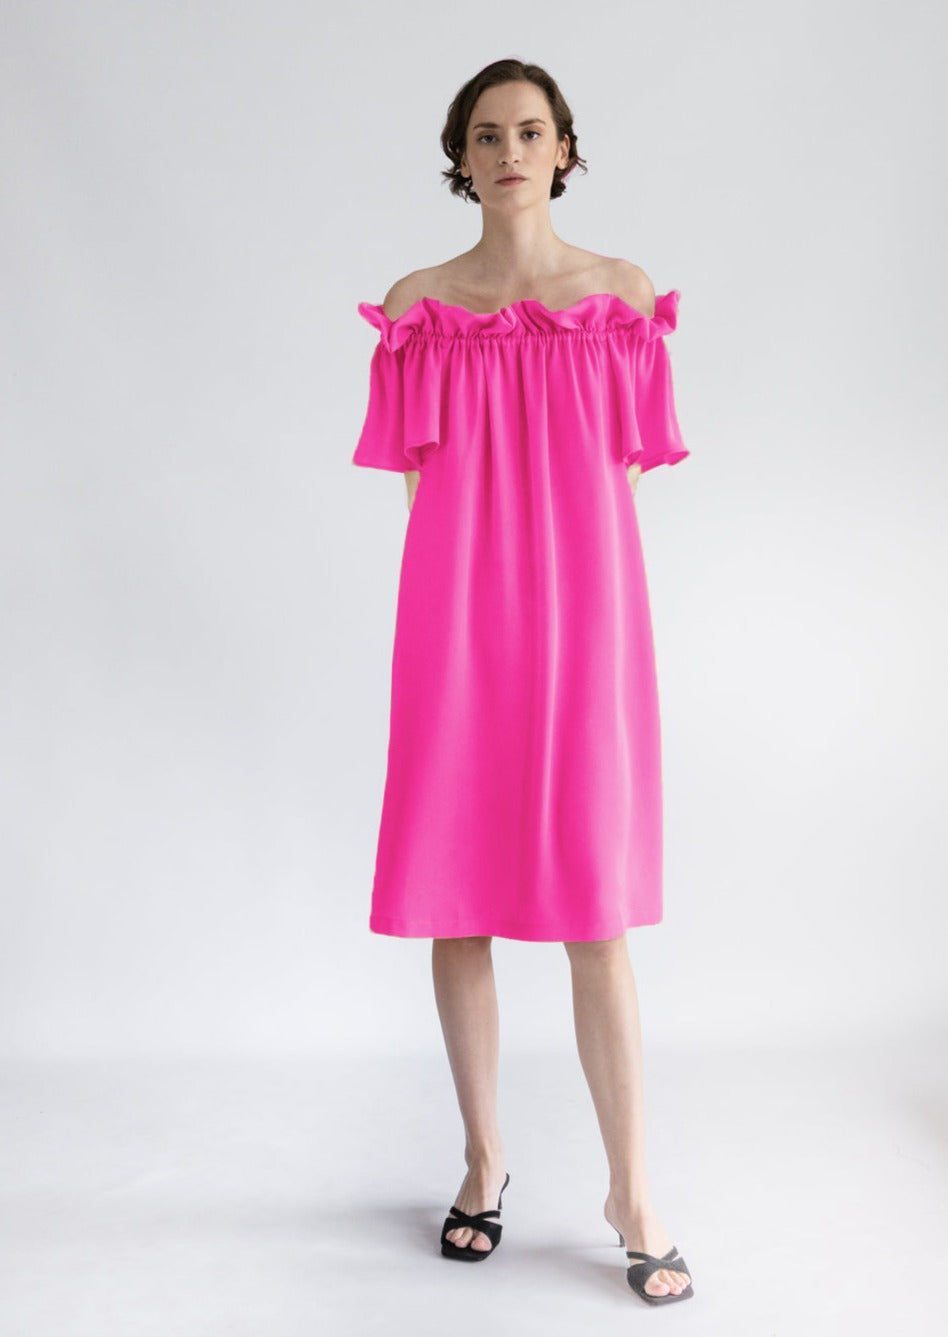 PENNY DRESS, Hot pink